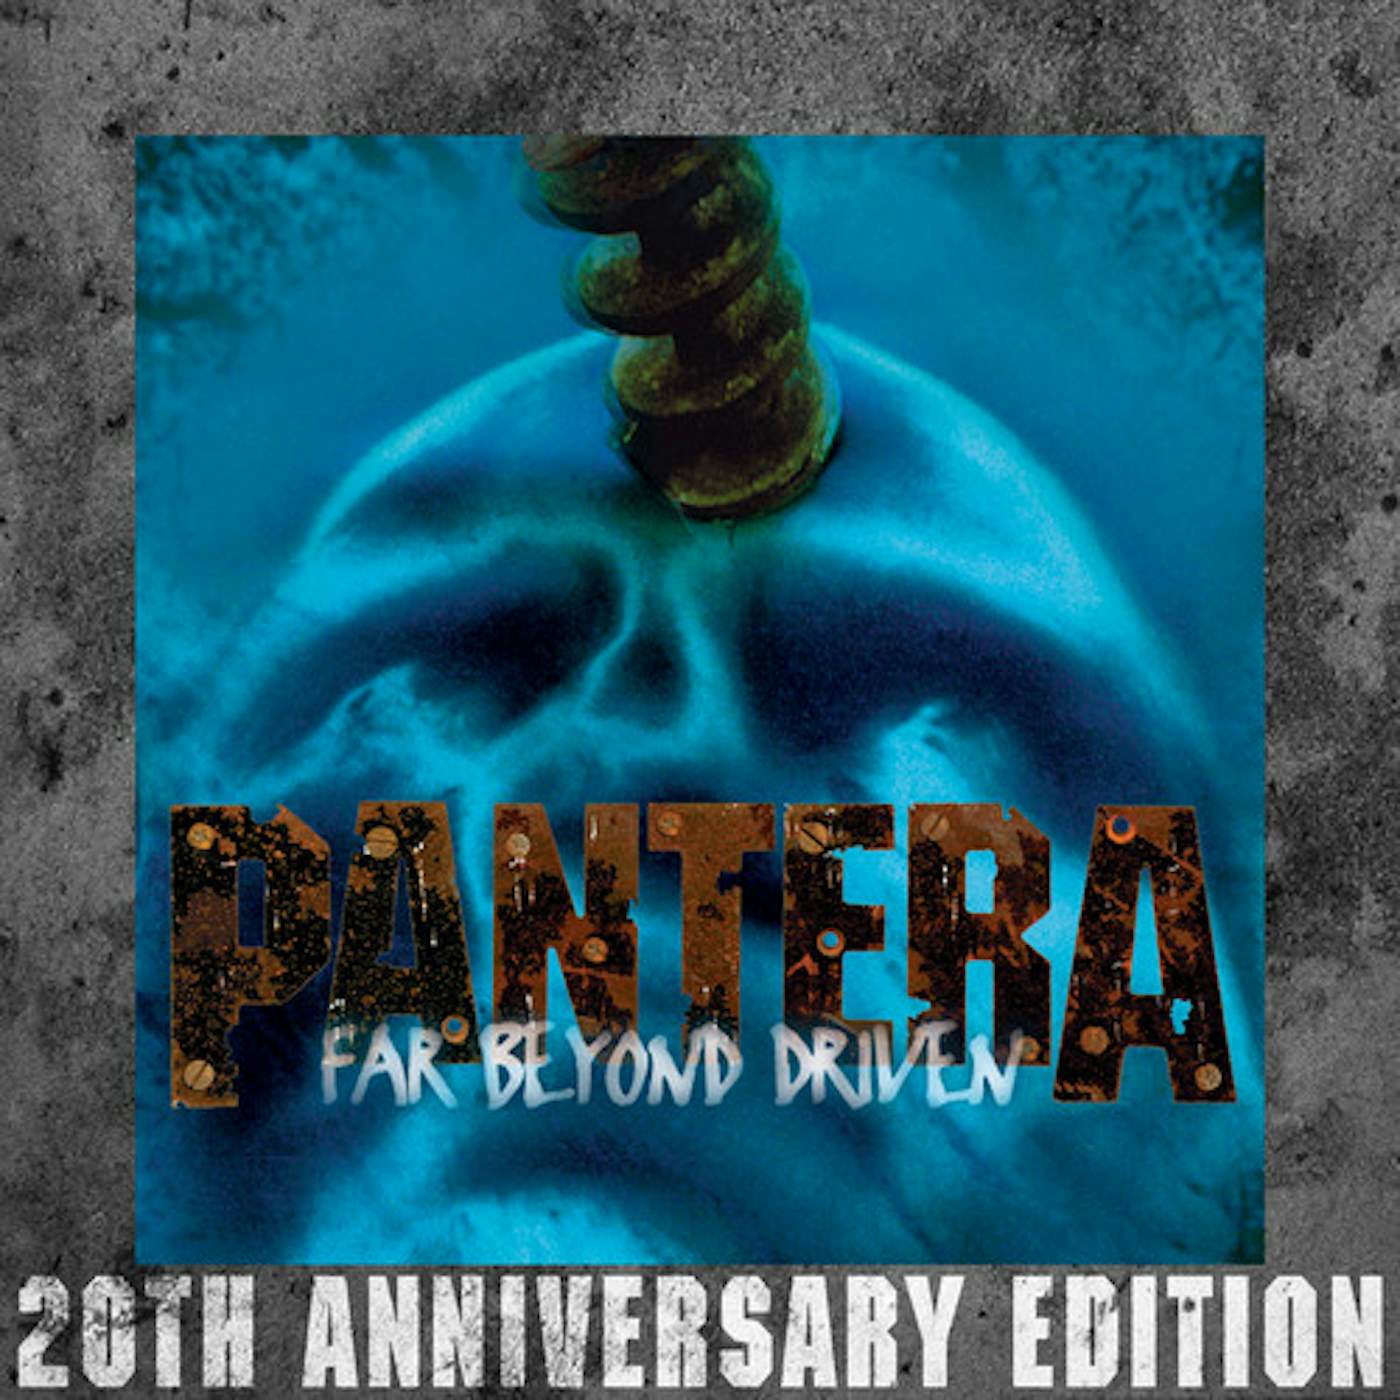 Pantera FAR BEYOND DRIVEN (20TH ANNIVERSARY EDITION) CD